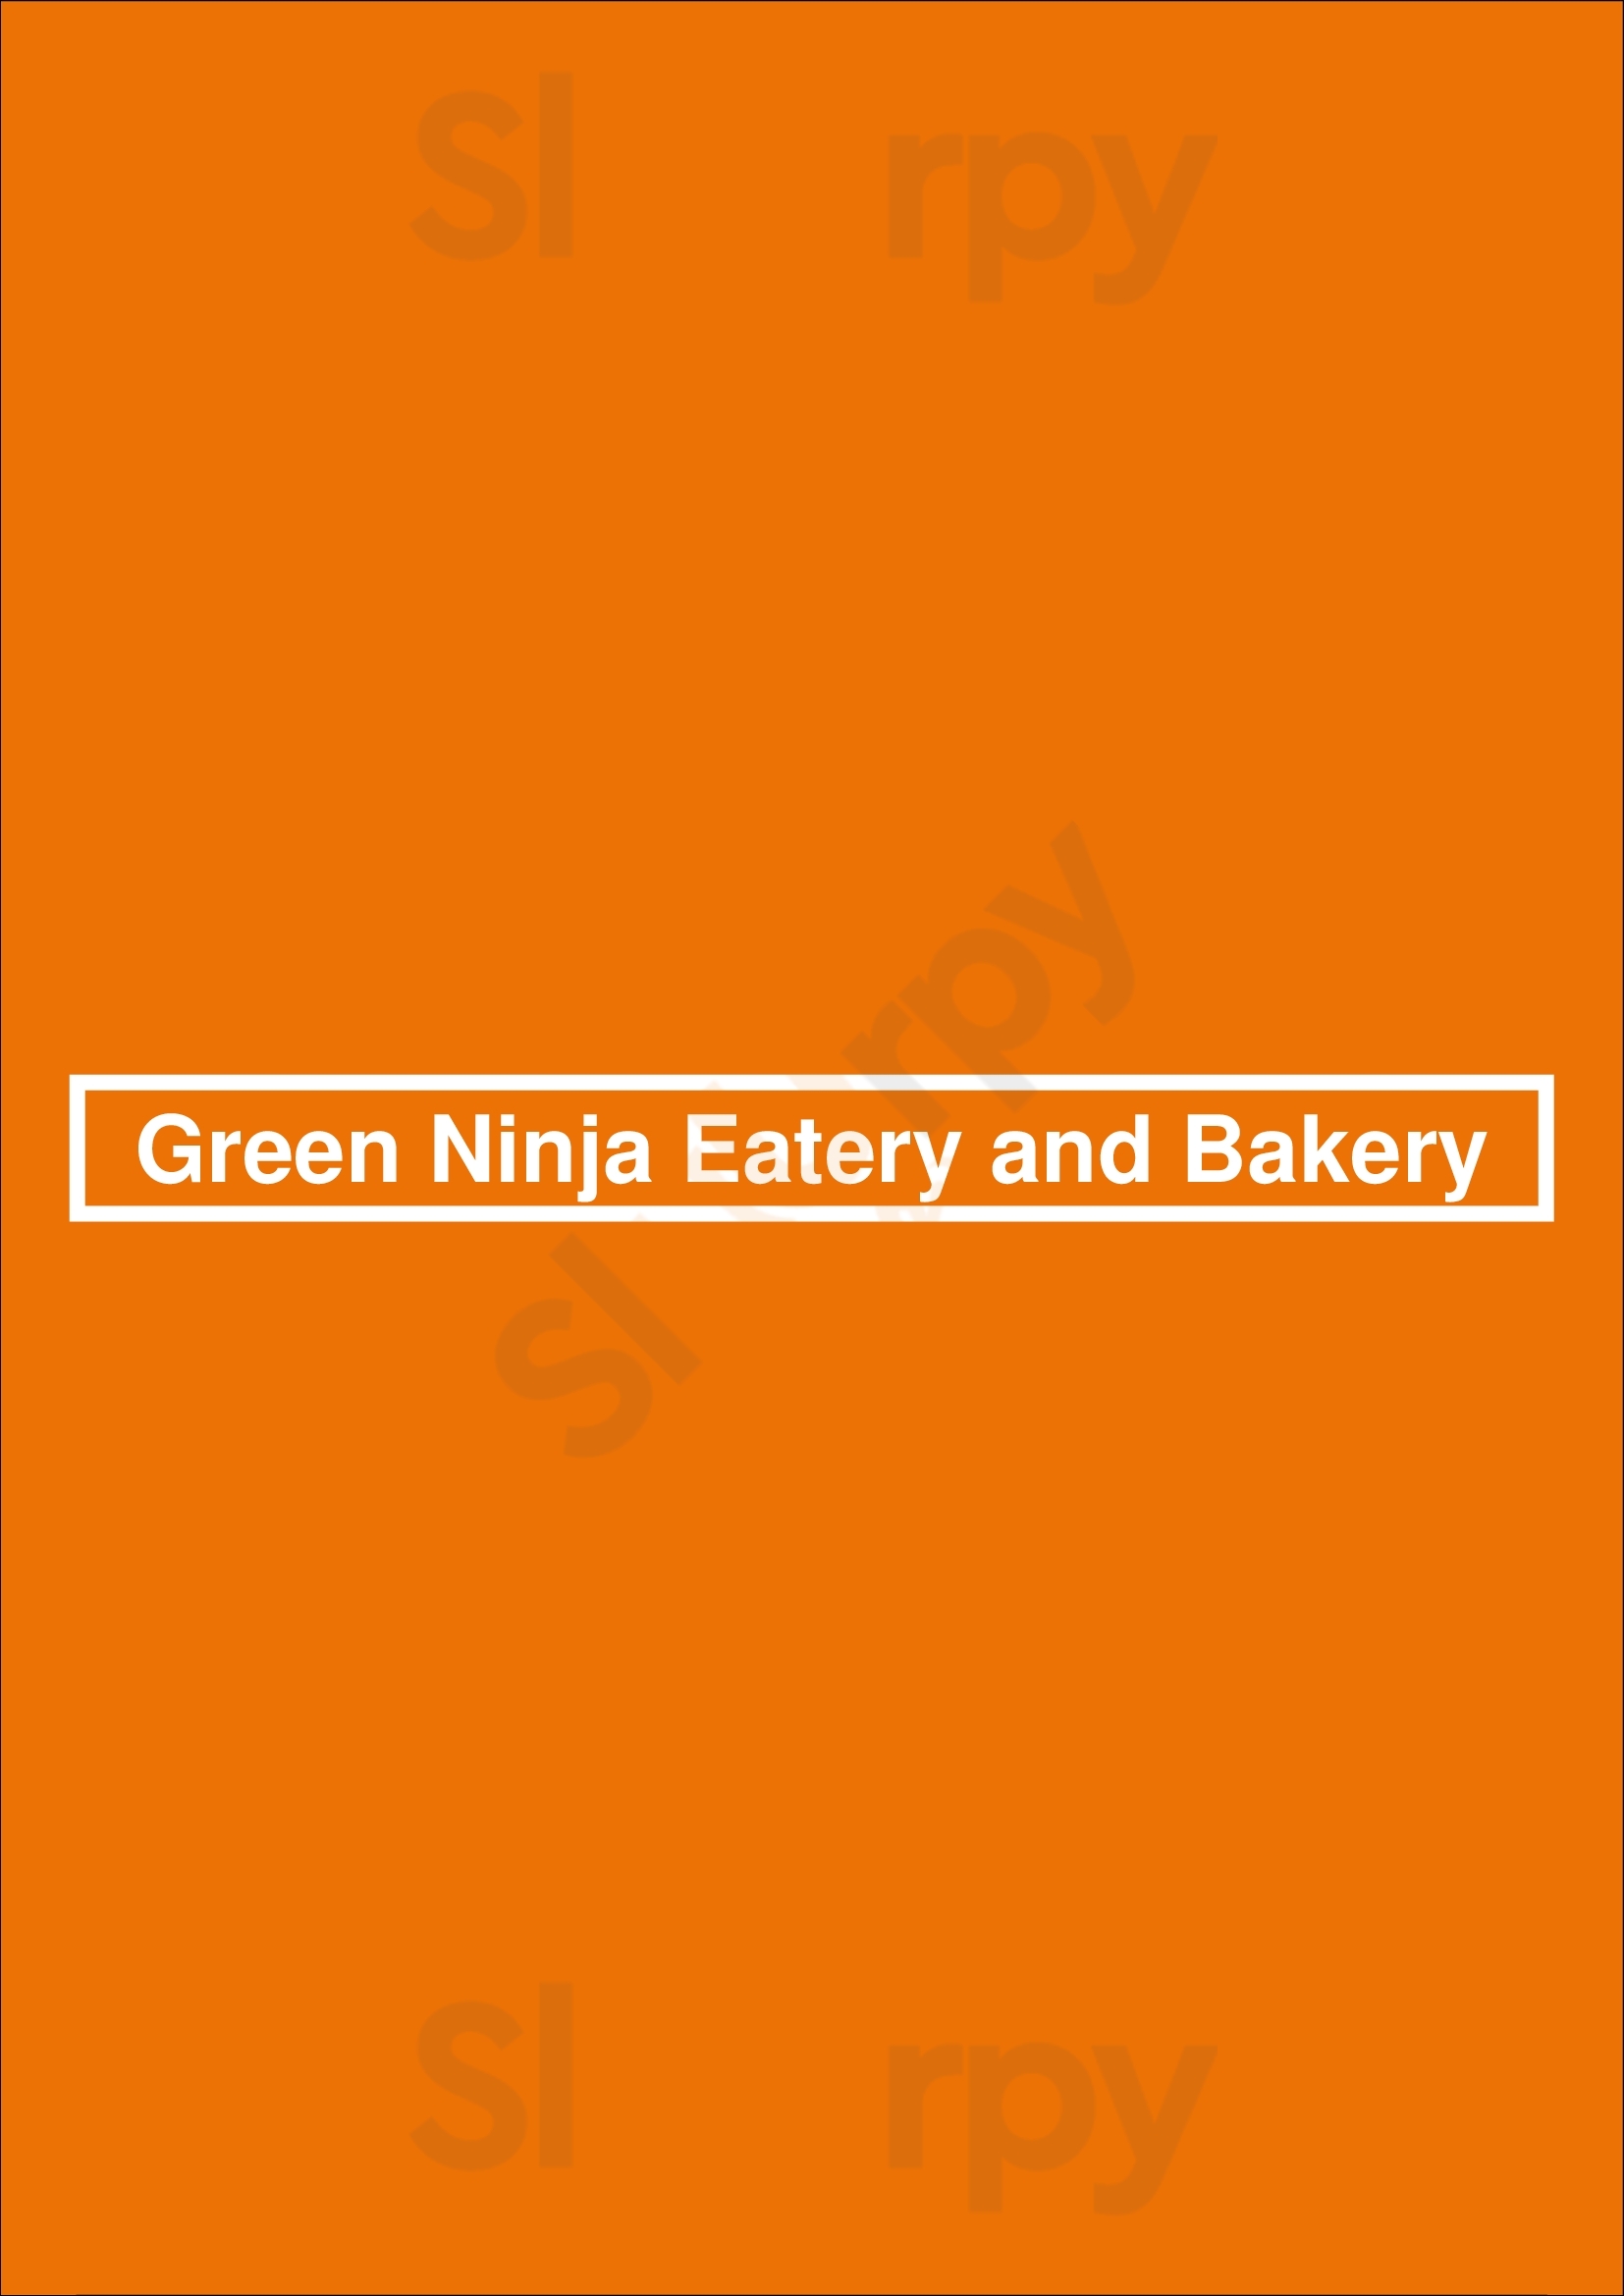 Green Ninja Eatery And Bakery Winnipeg Menu - 1